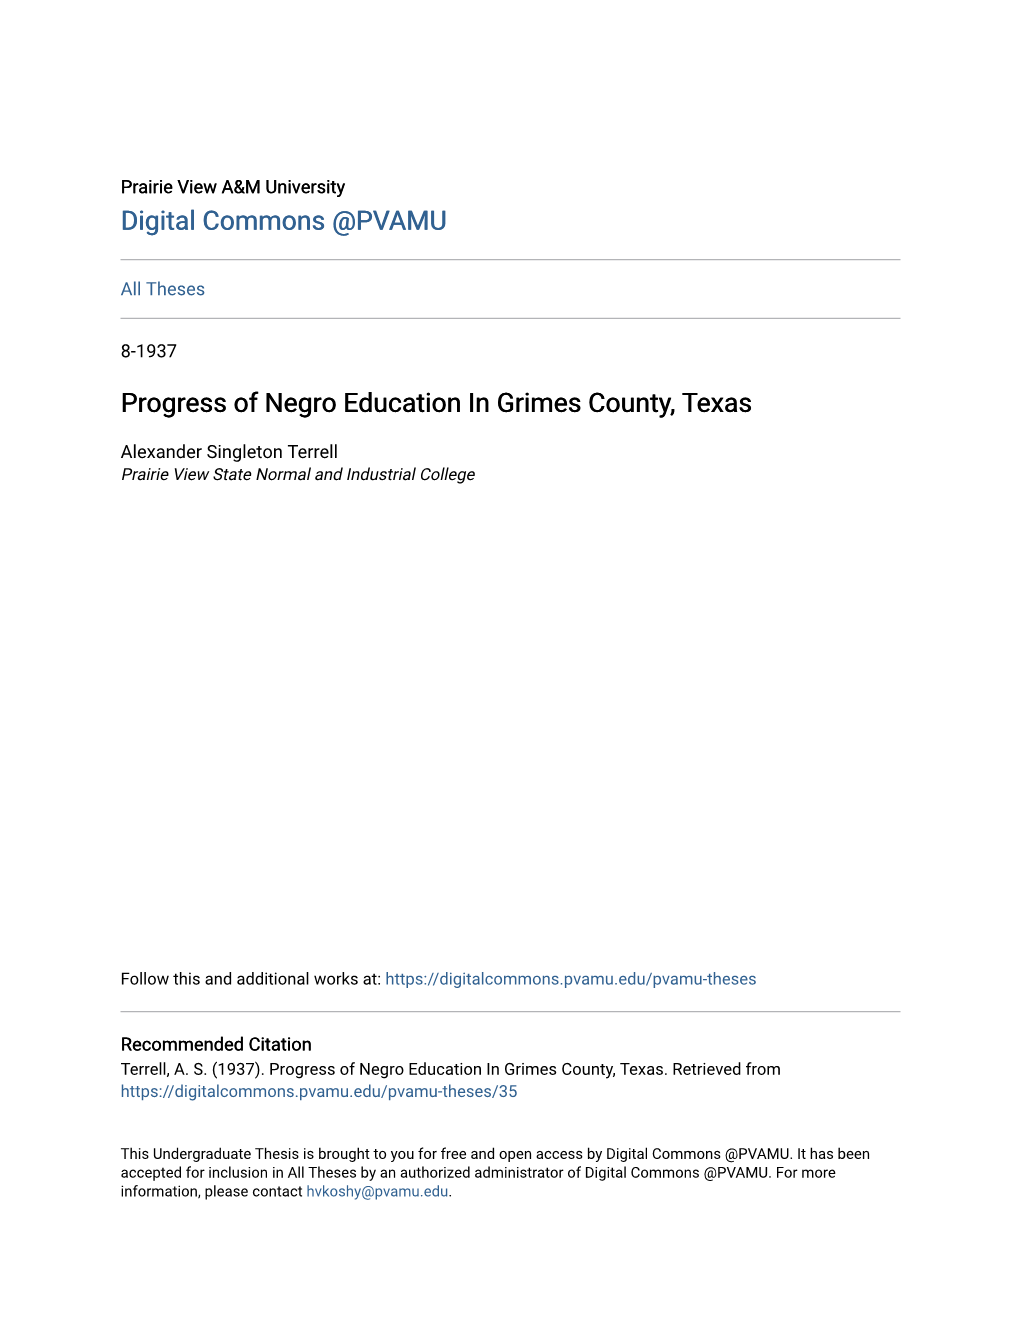 Progress of Negro Education in Grimes County, Texas